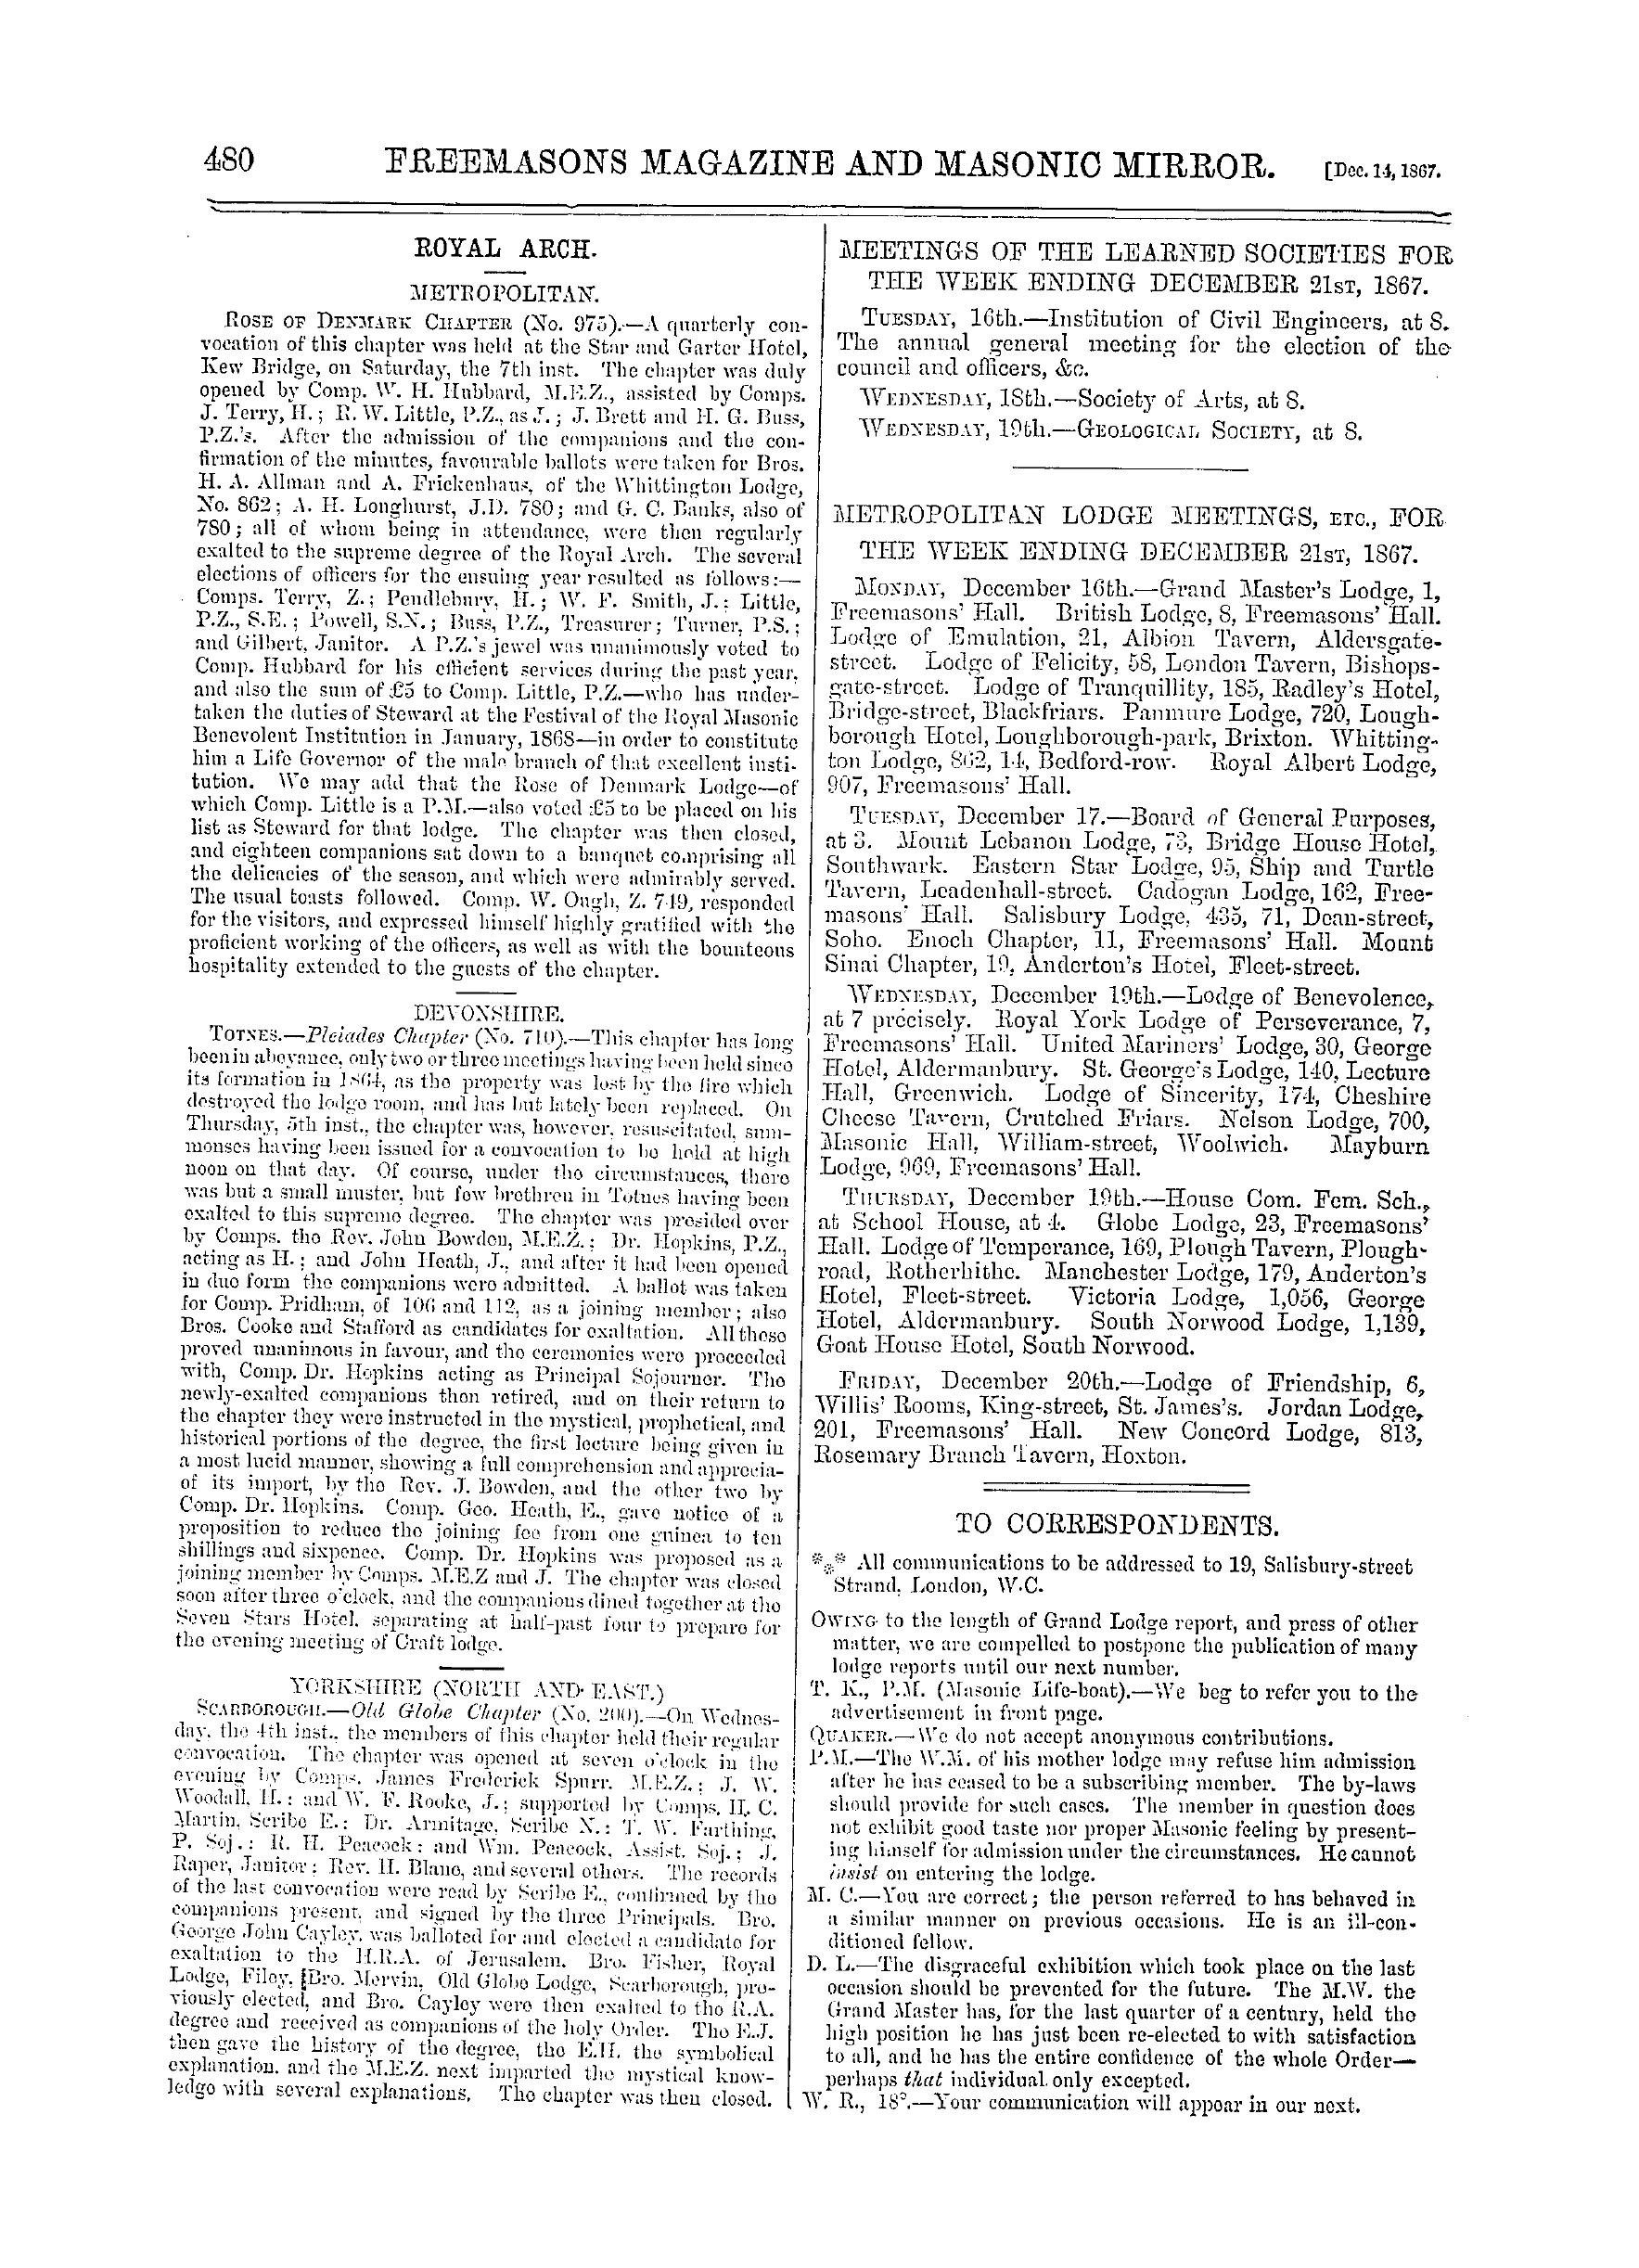 The Freemasons' Monthly Magazine: 1867-12-14 - Metropolitan Lodge Meetings, Etc., For The Week Ending December 21st , 1867.